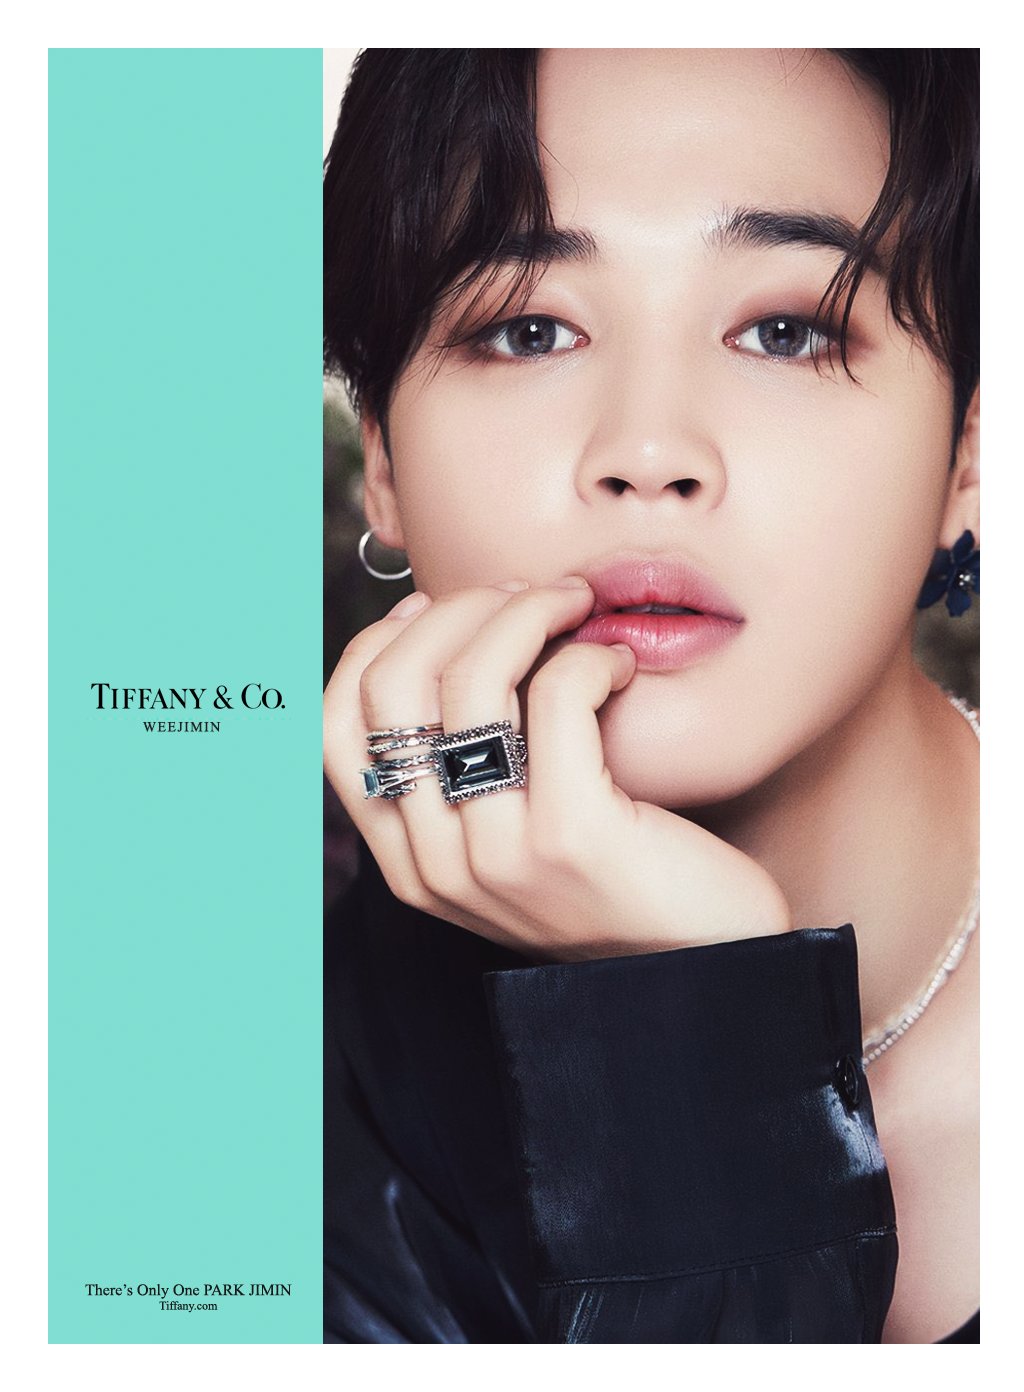 Jimin Stars in Sparkling New Tiffany & Co. Campaign – Billboard